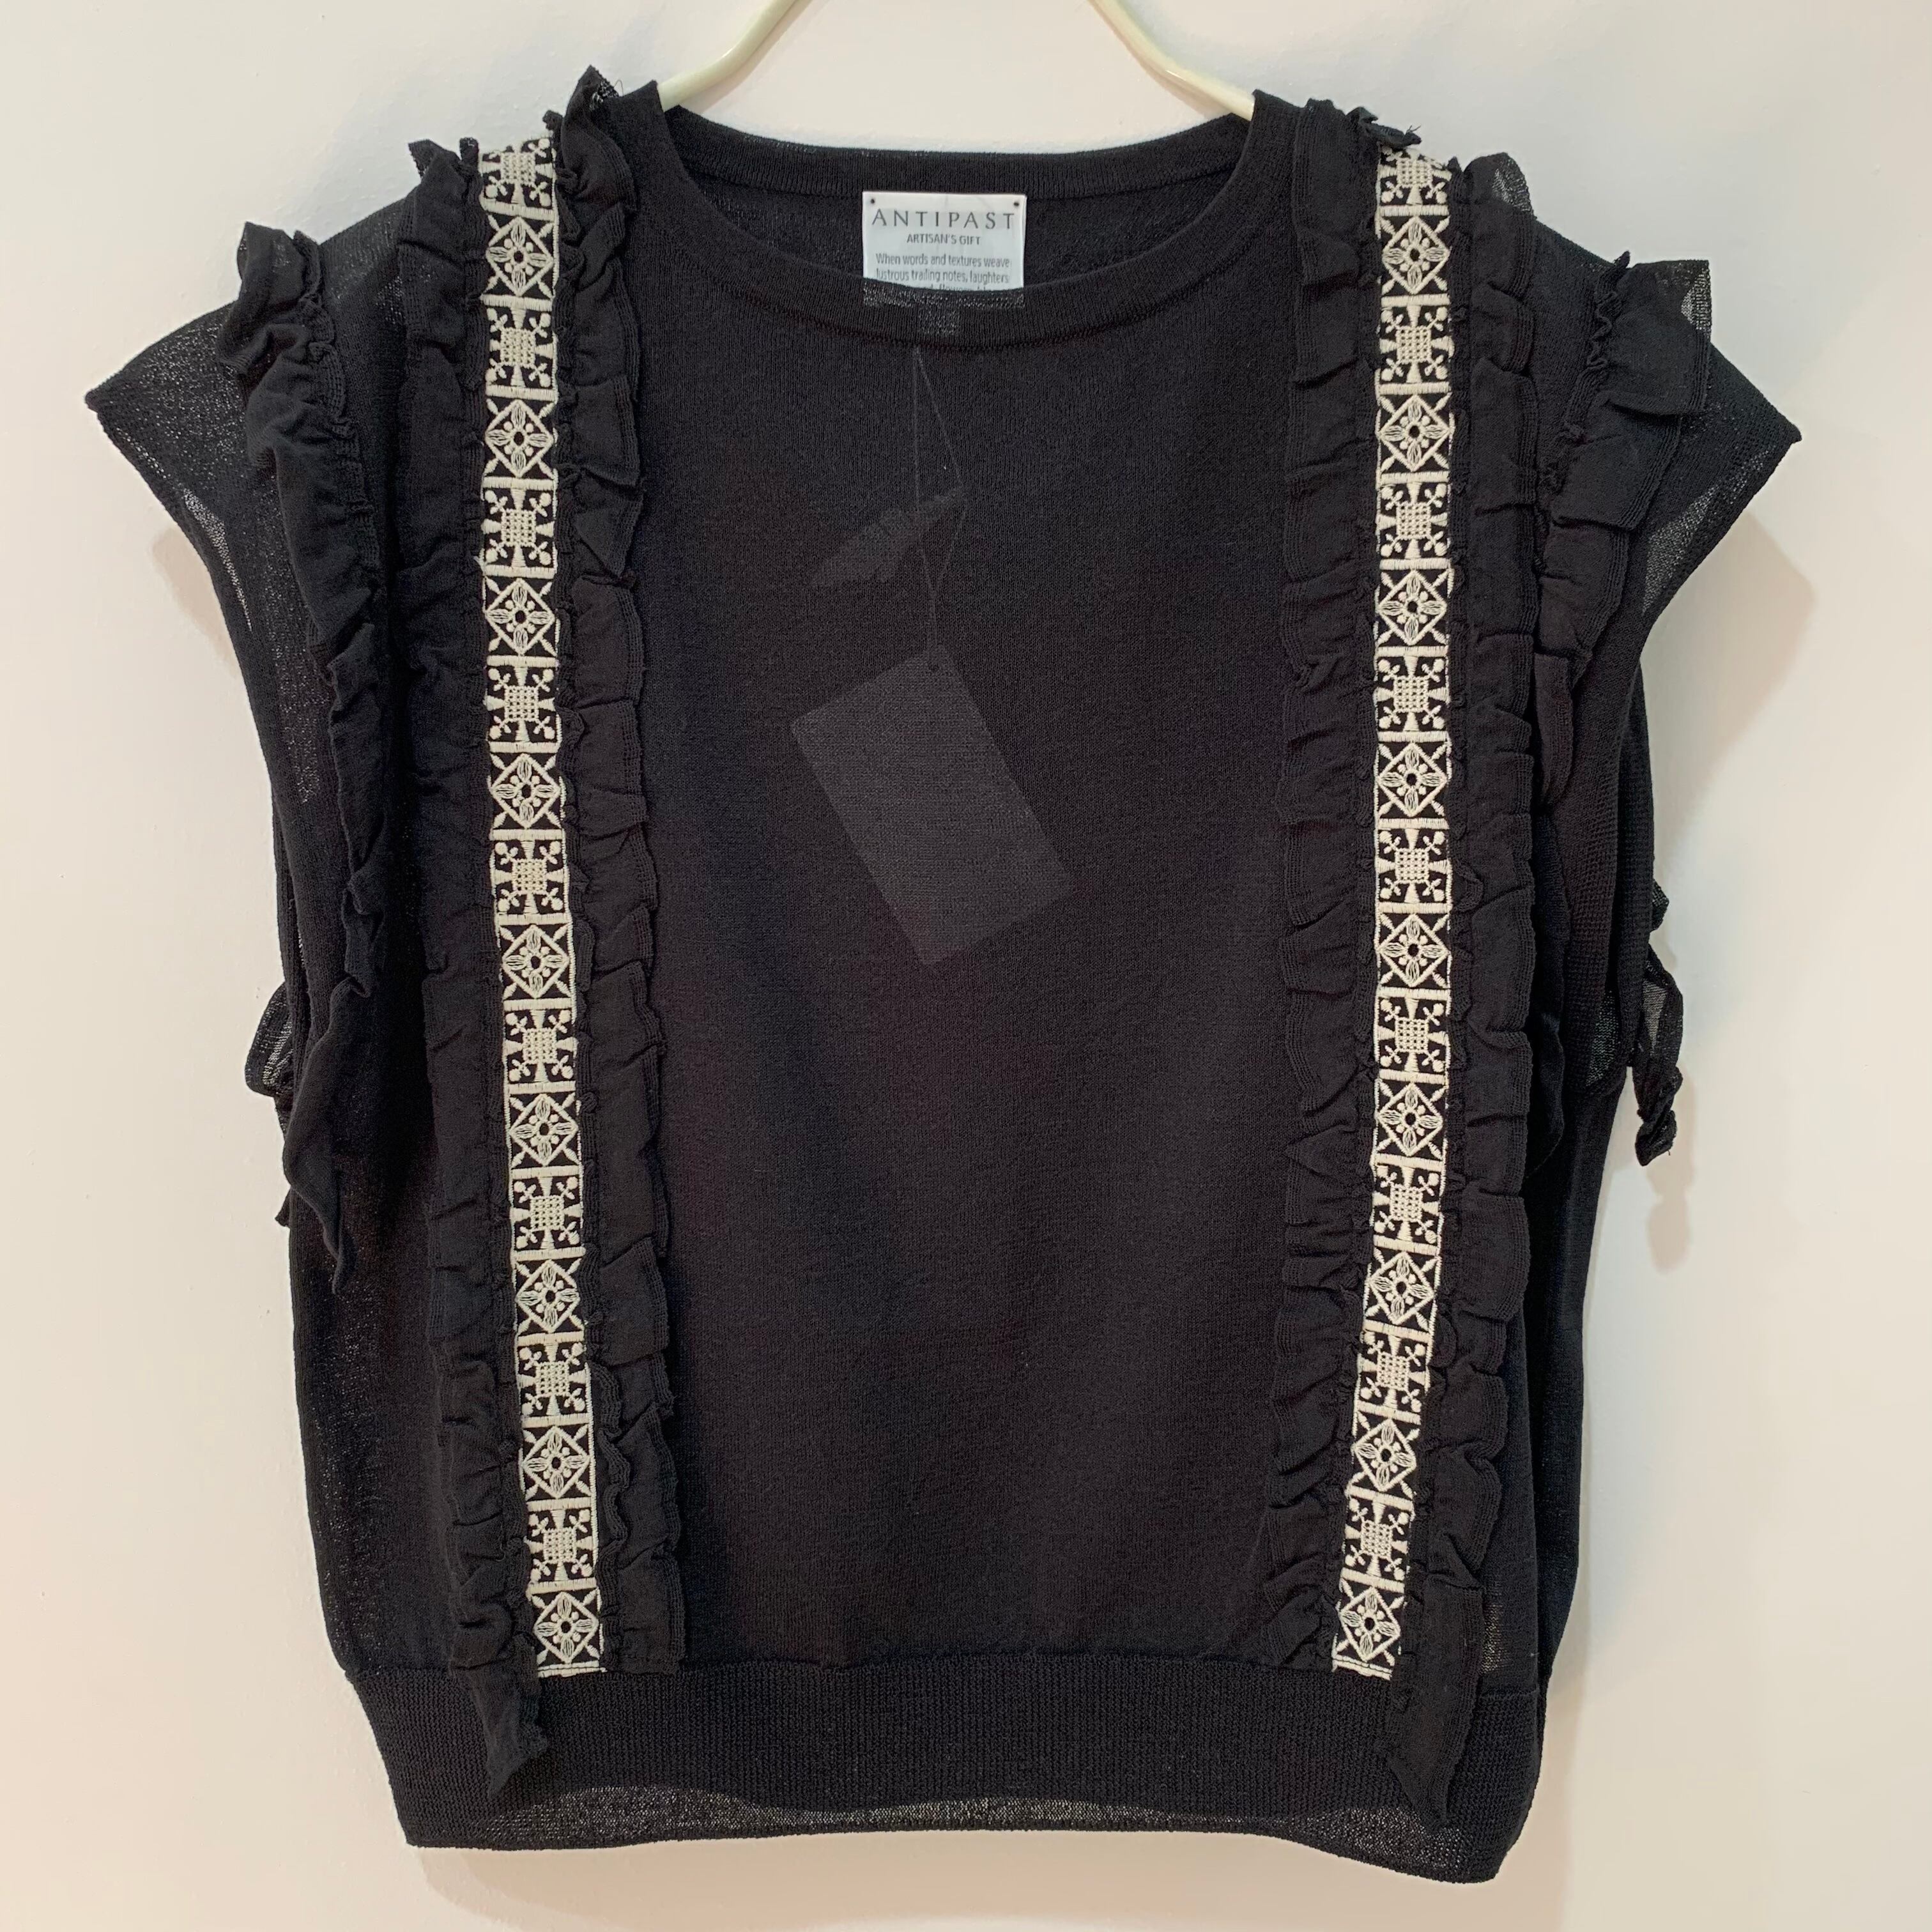 fantastic botanical broidery black shirt